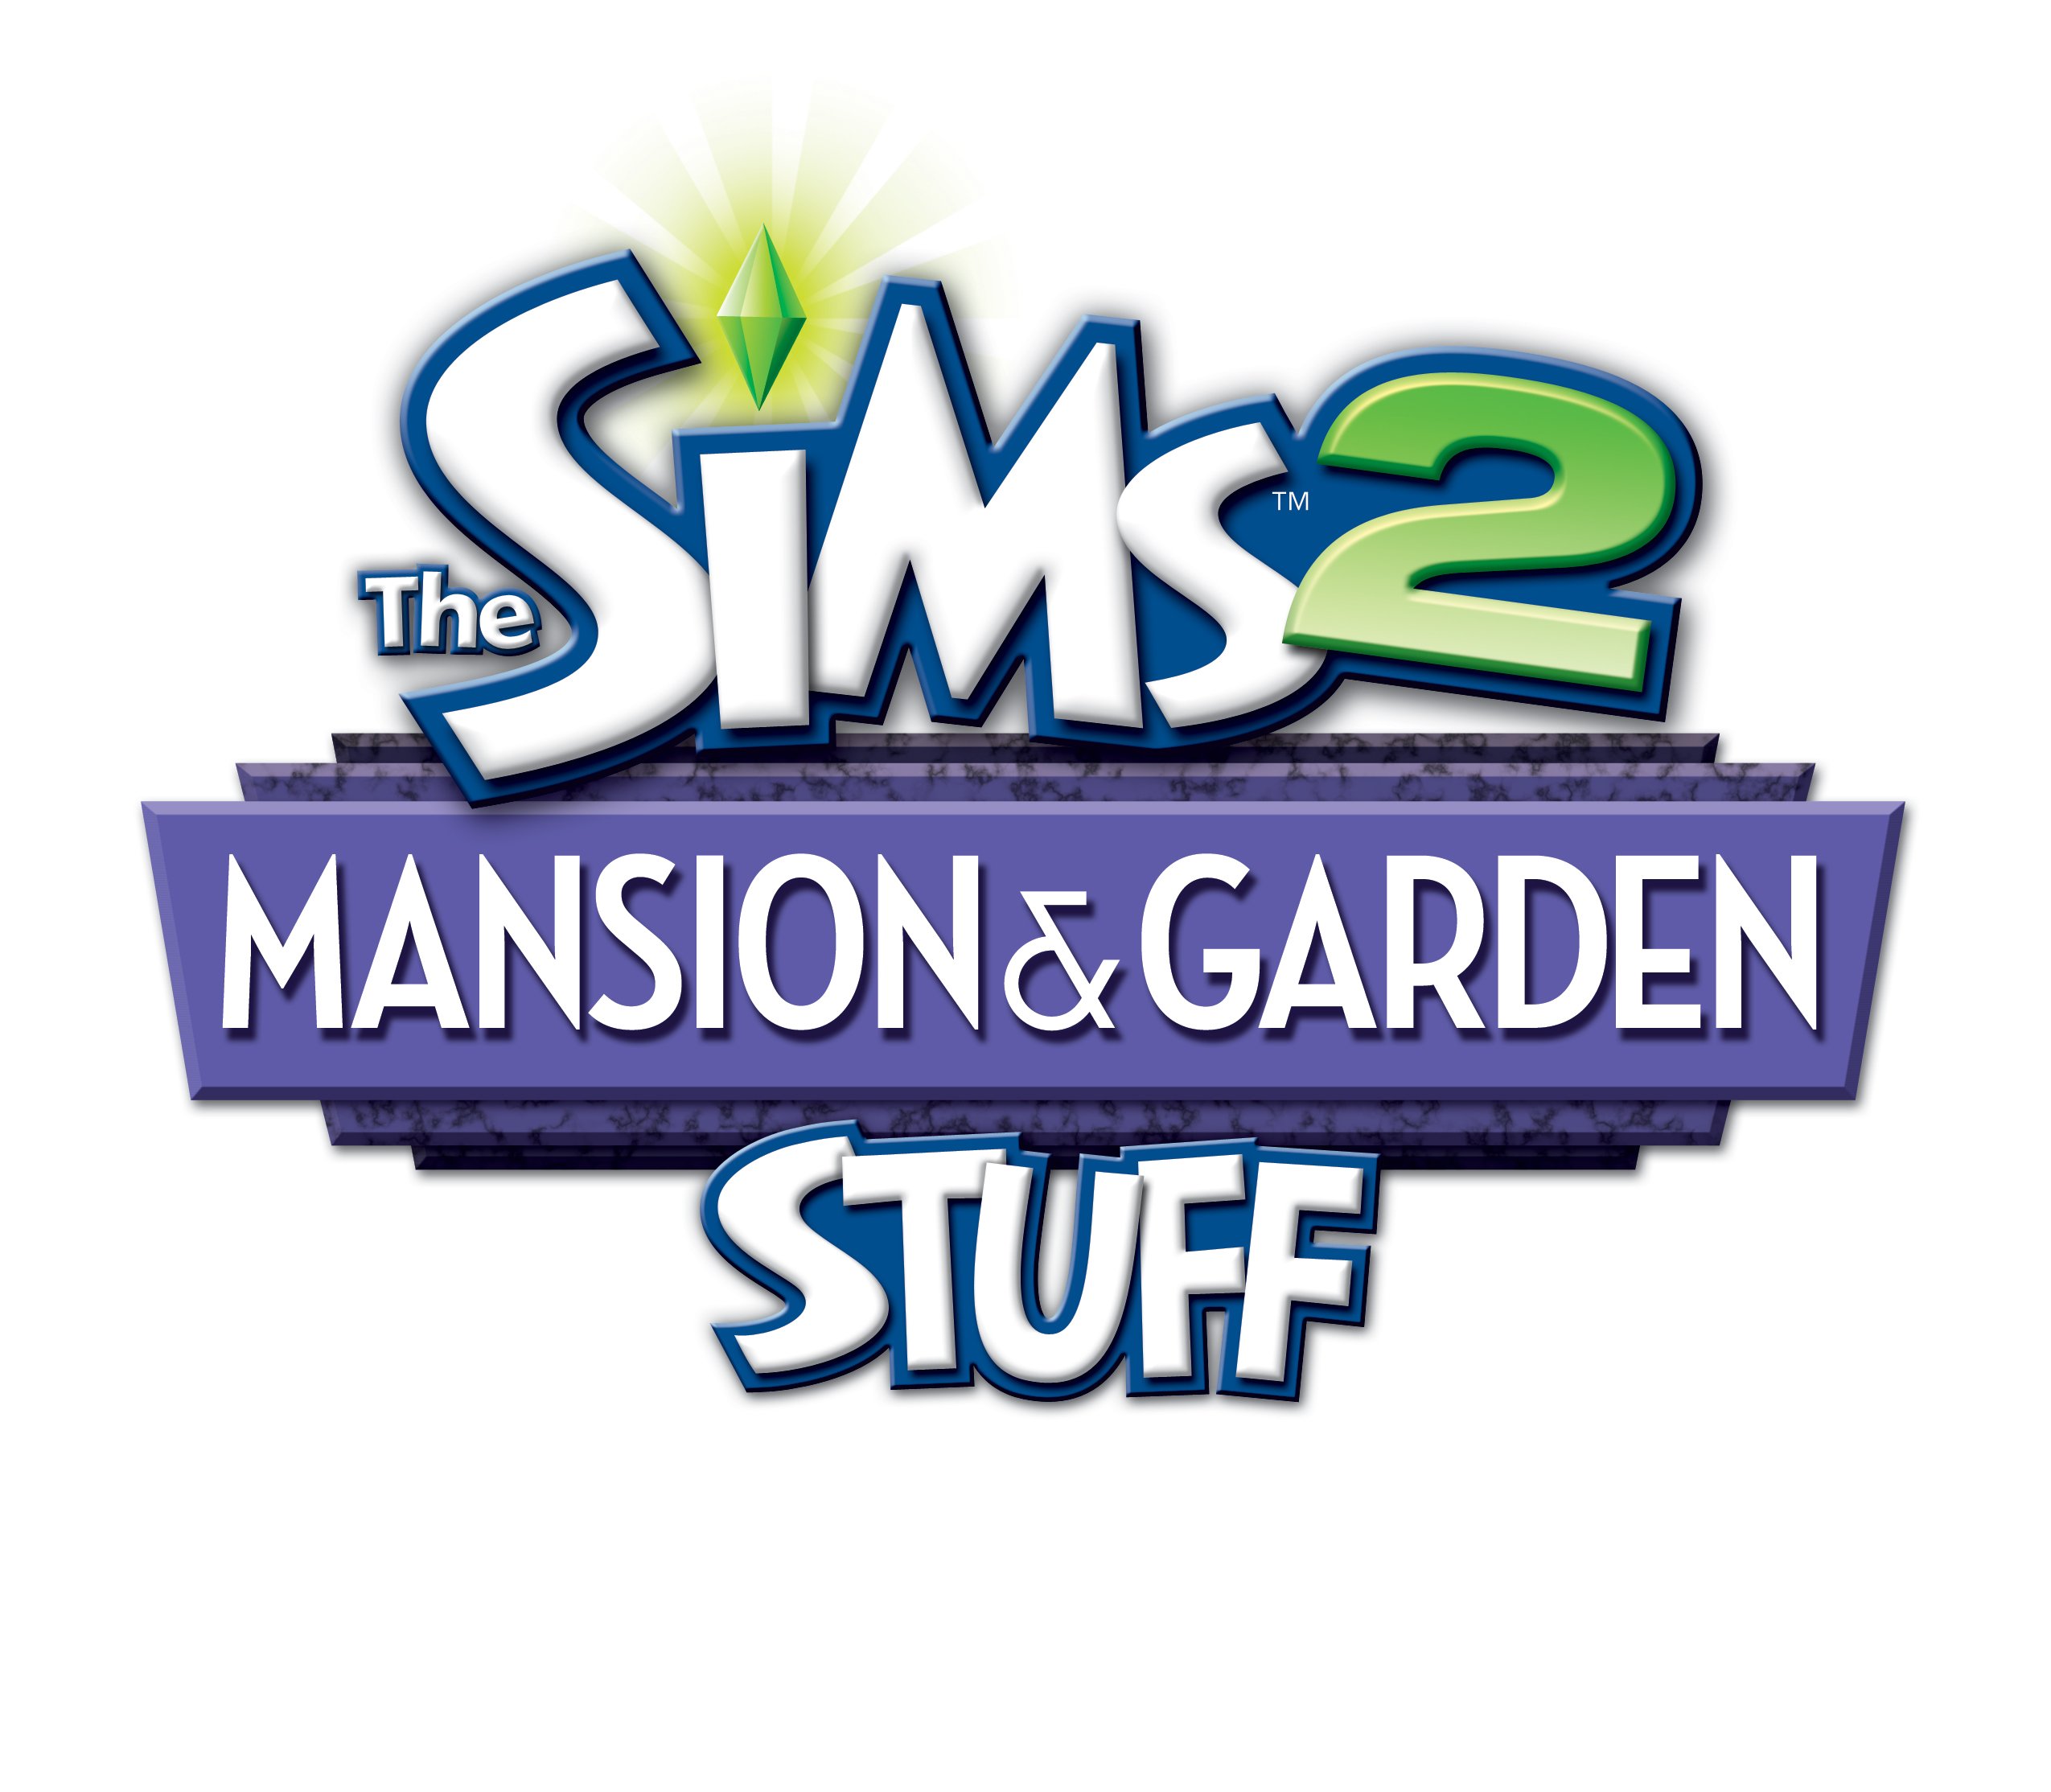 Gartenaccessoires Modern Genial the Sims 2 Ð¡Ð°Ð´Ñ Ð¸ Ð¾ÑÐ¾Ð±Ð½ÑÐºÐ¸ 9 Ð¹ ÐºÐ°ÑÐ°Ð Ð¾Ð³ [ÐÑÑÐ¸Ð²] Prosims